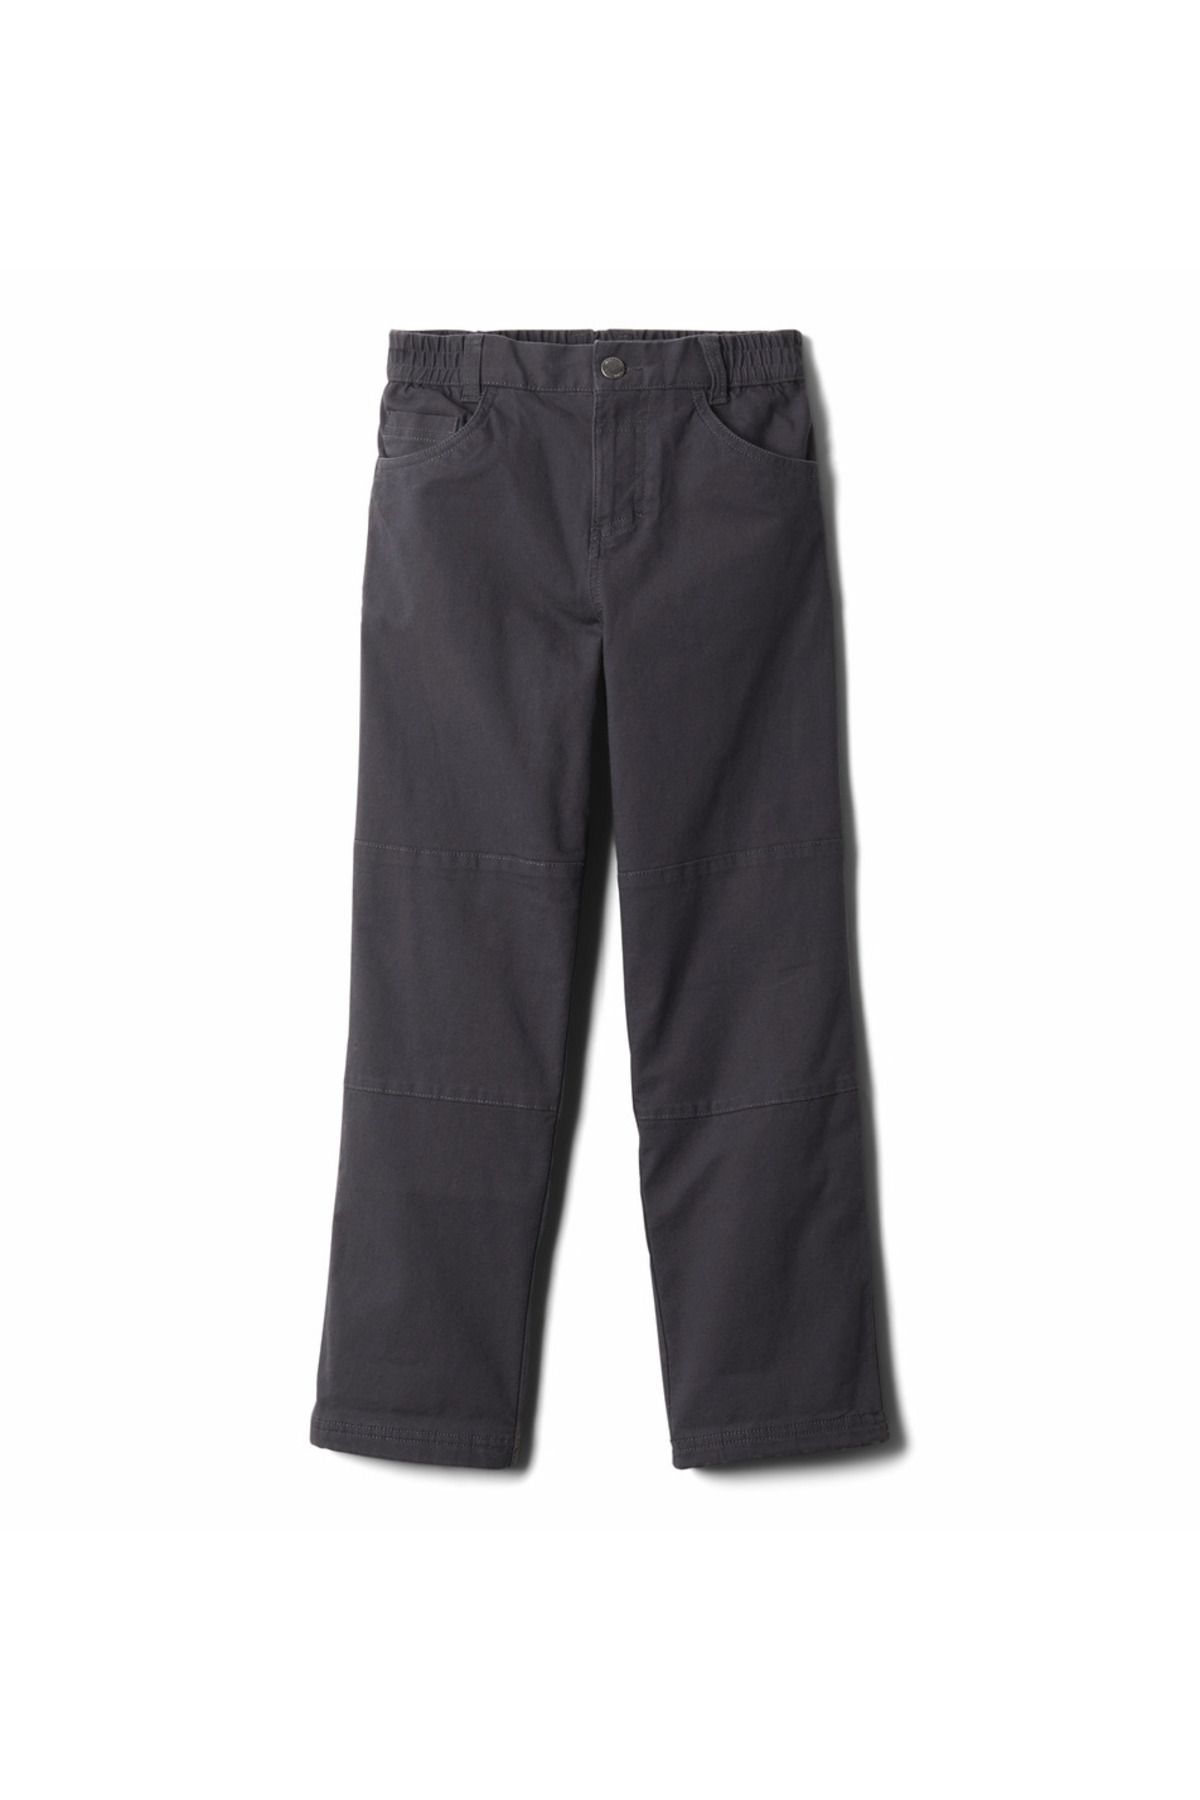 Columbia Flex Roc Fleece Lined Çocuk Pantolon